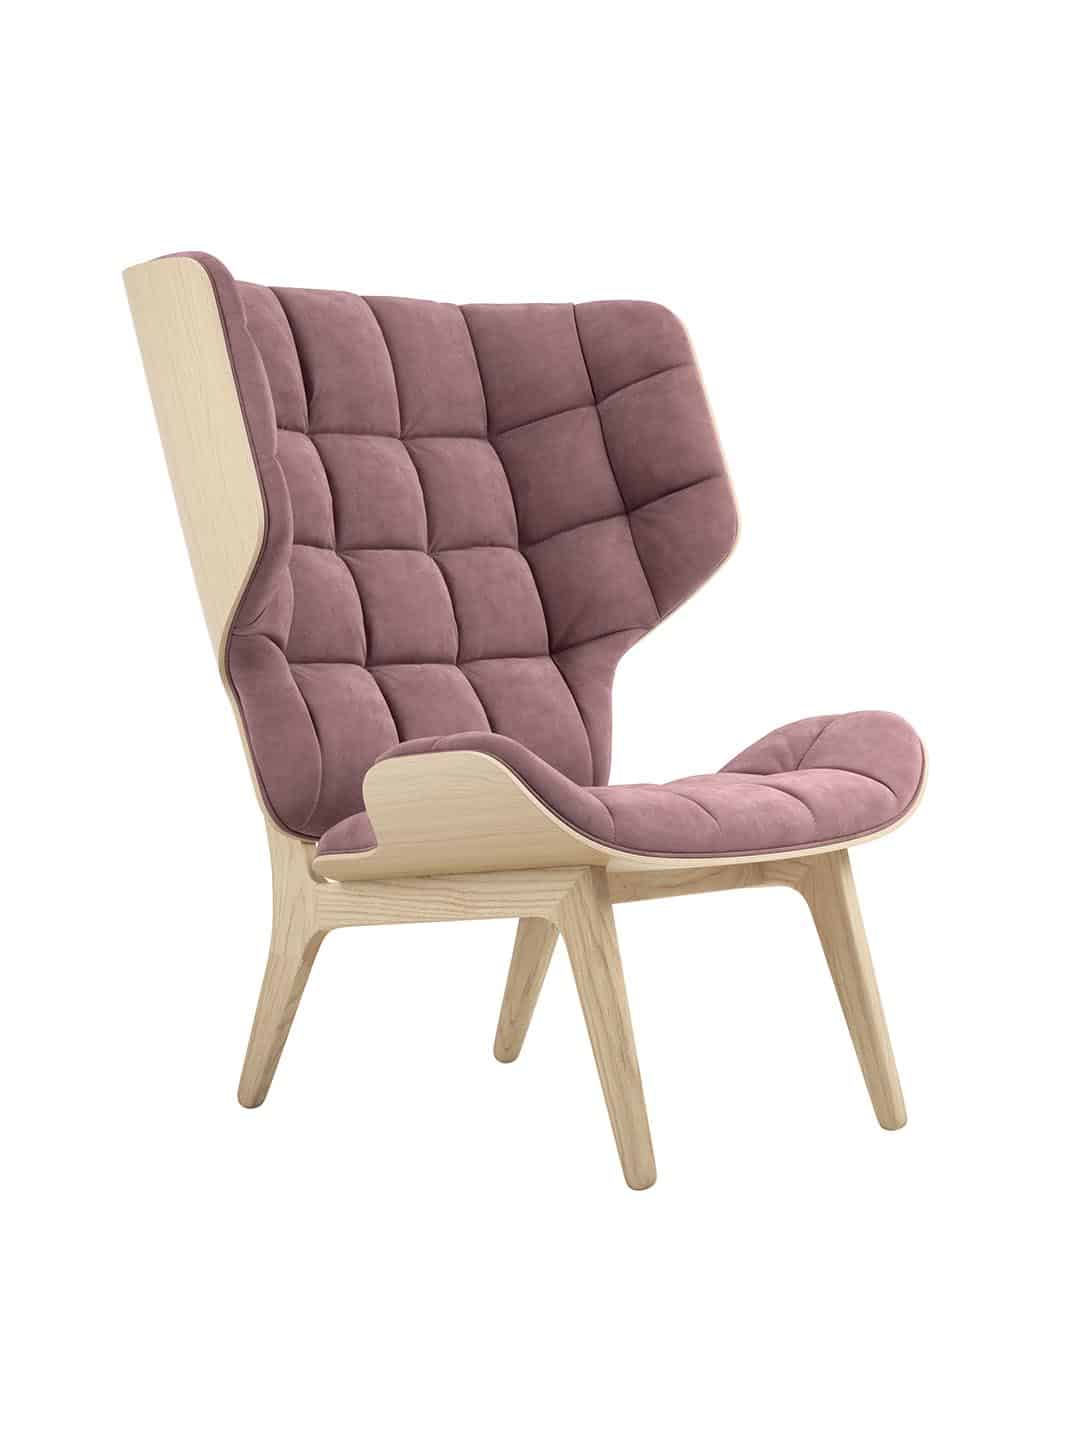 Красивое кресло NORR11 Mammoth розового цвета